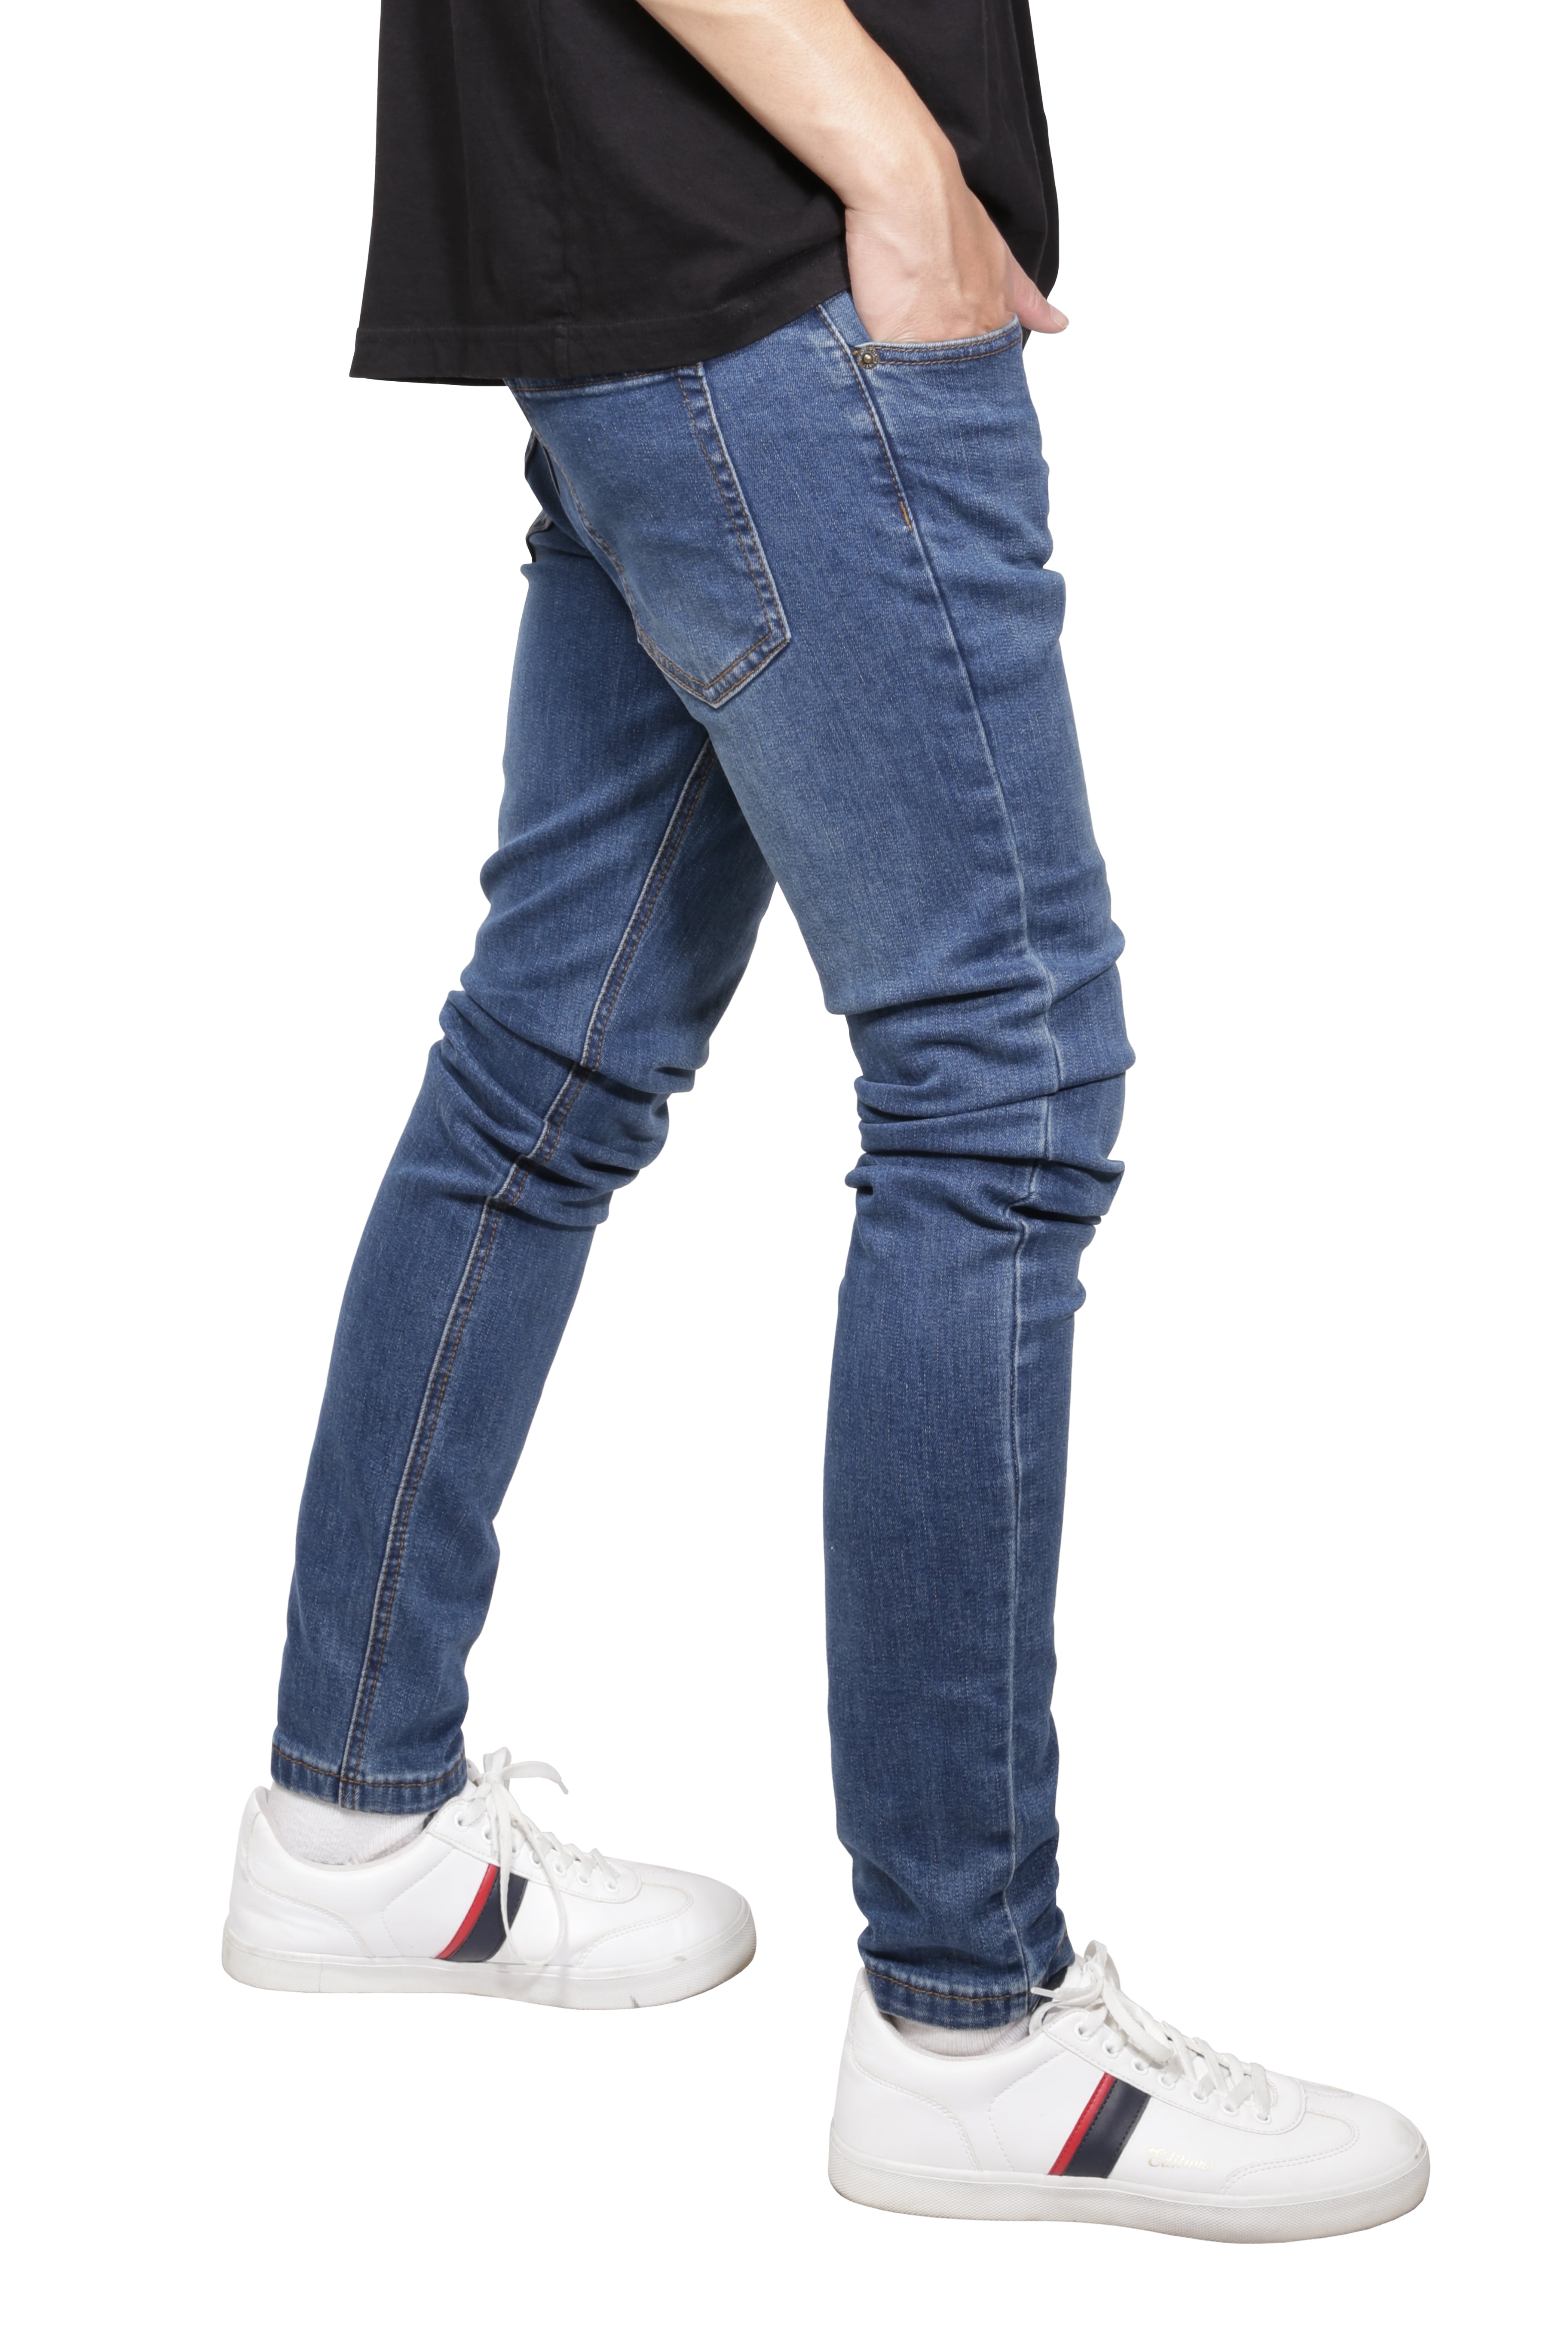 Blue Man Super Skinny Jeans 2843294